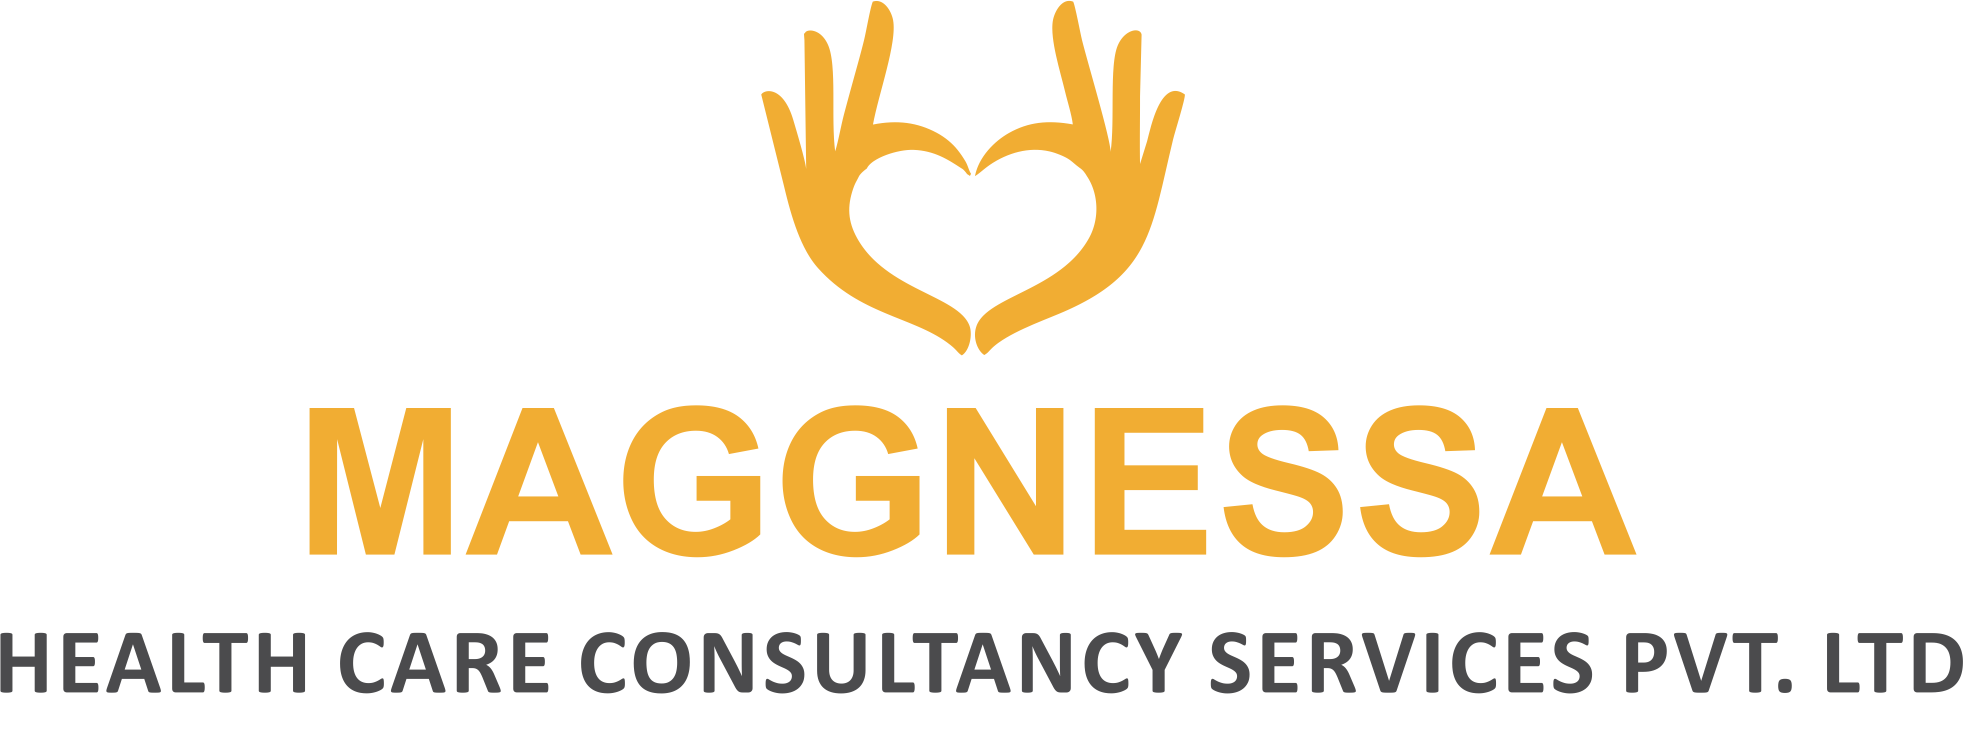 Maggnessa Healthcare Consultancy Services Pvt Ltd